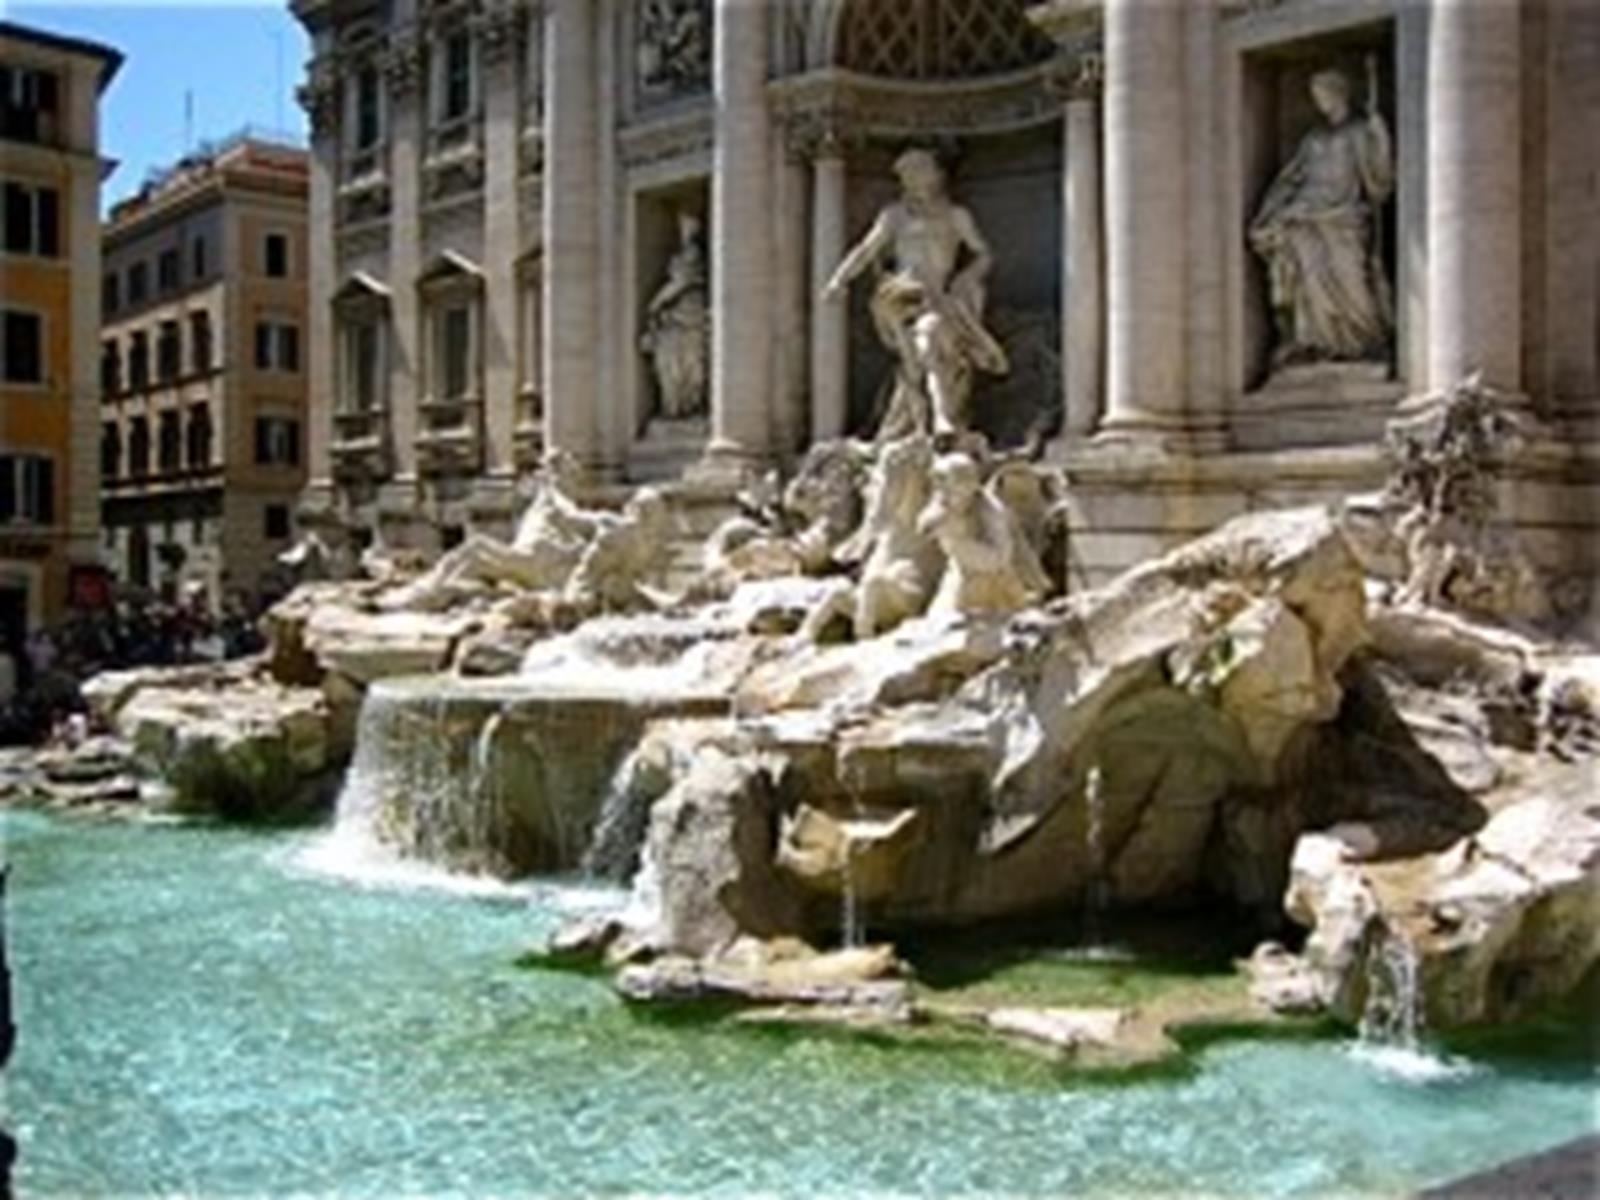 Venice's Trevi Fountain